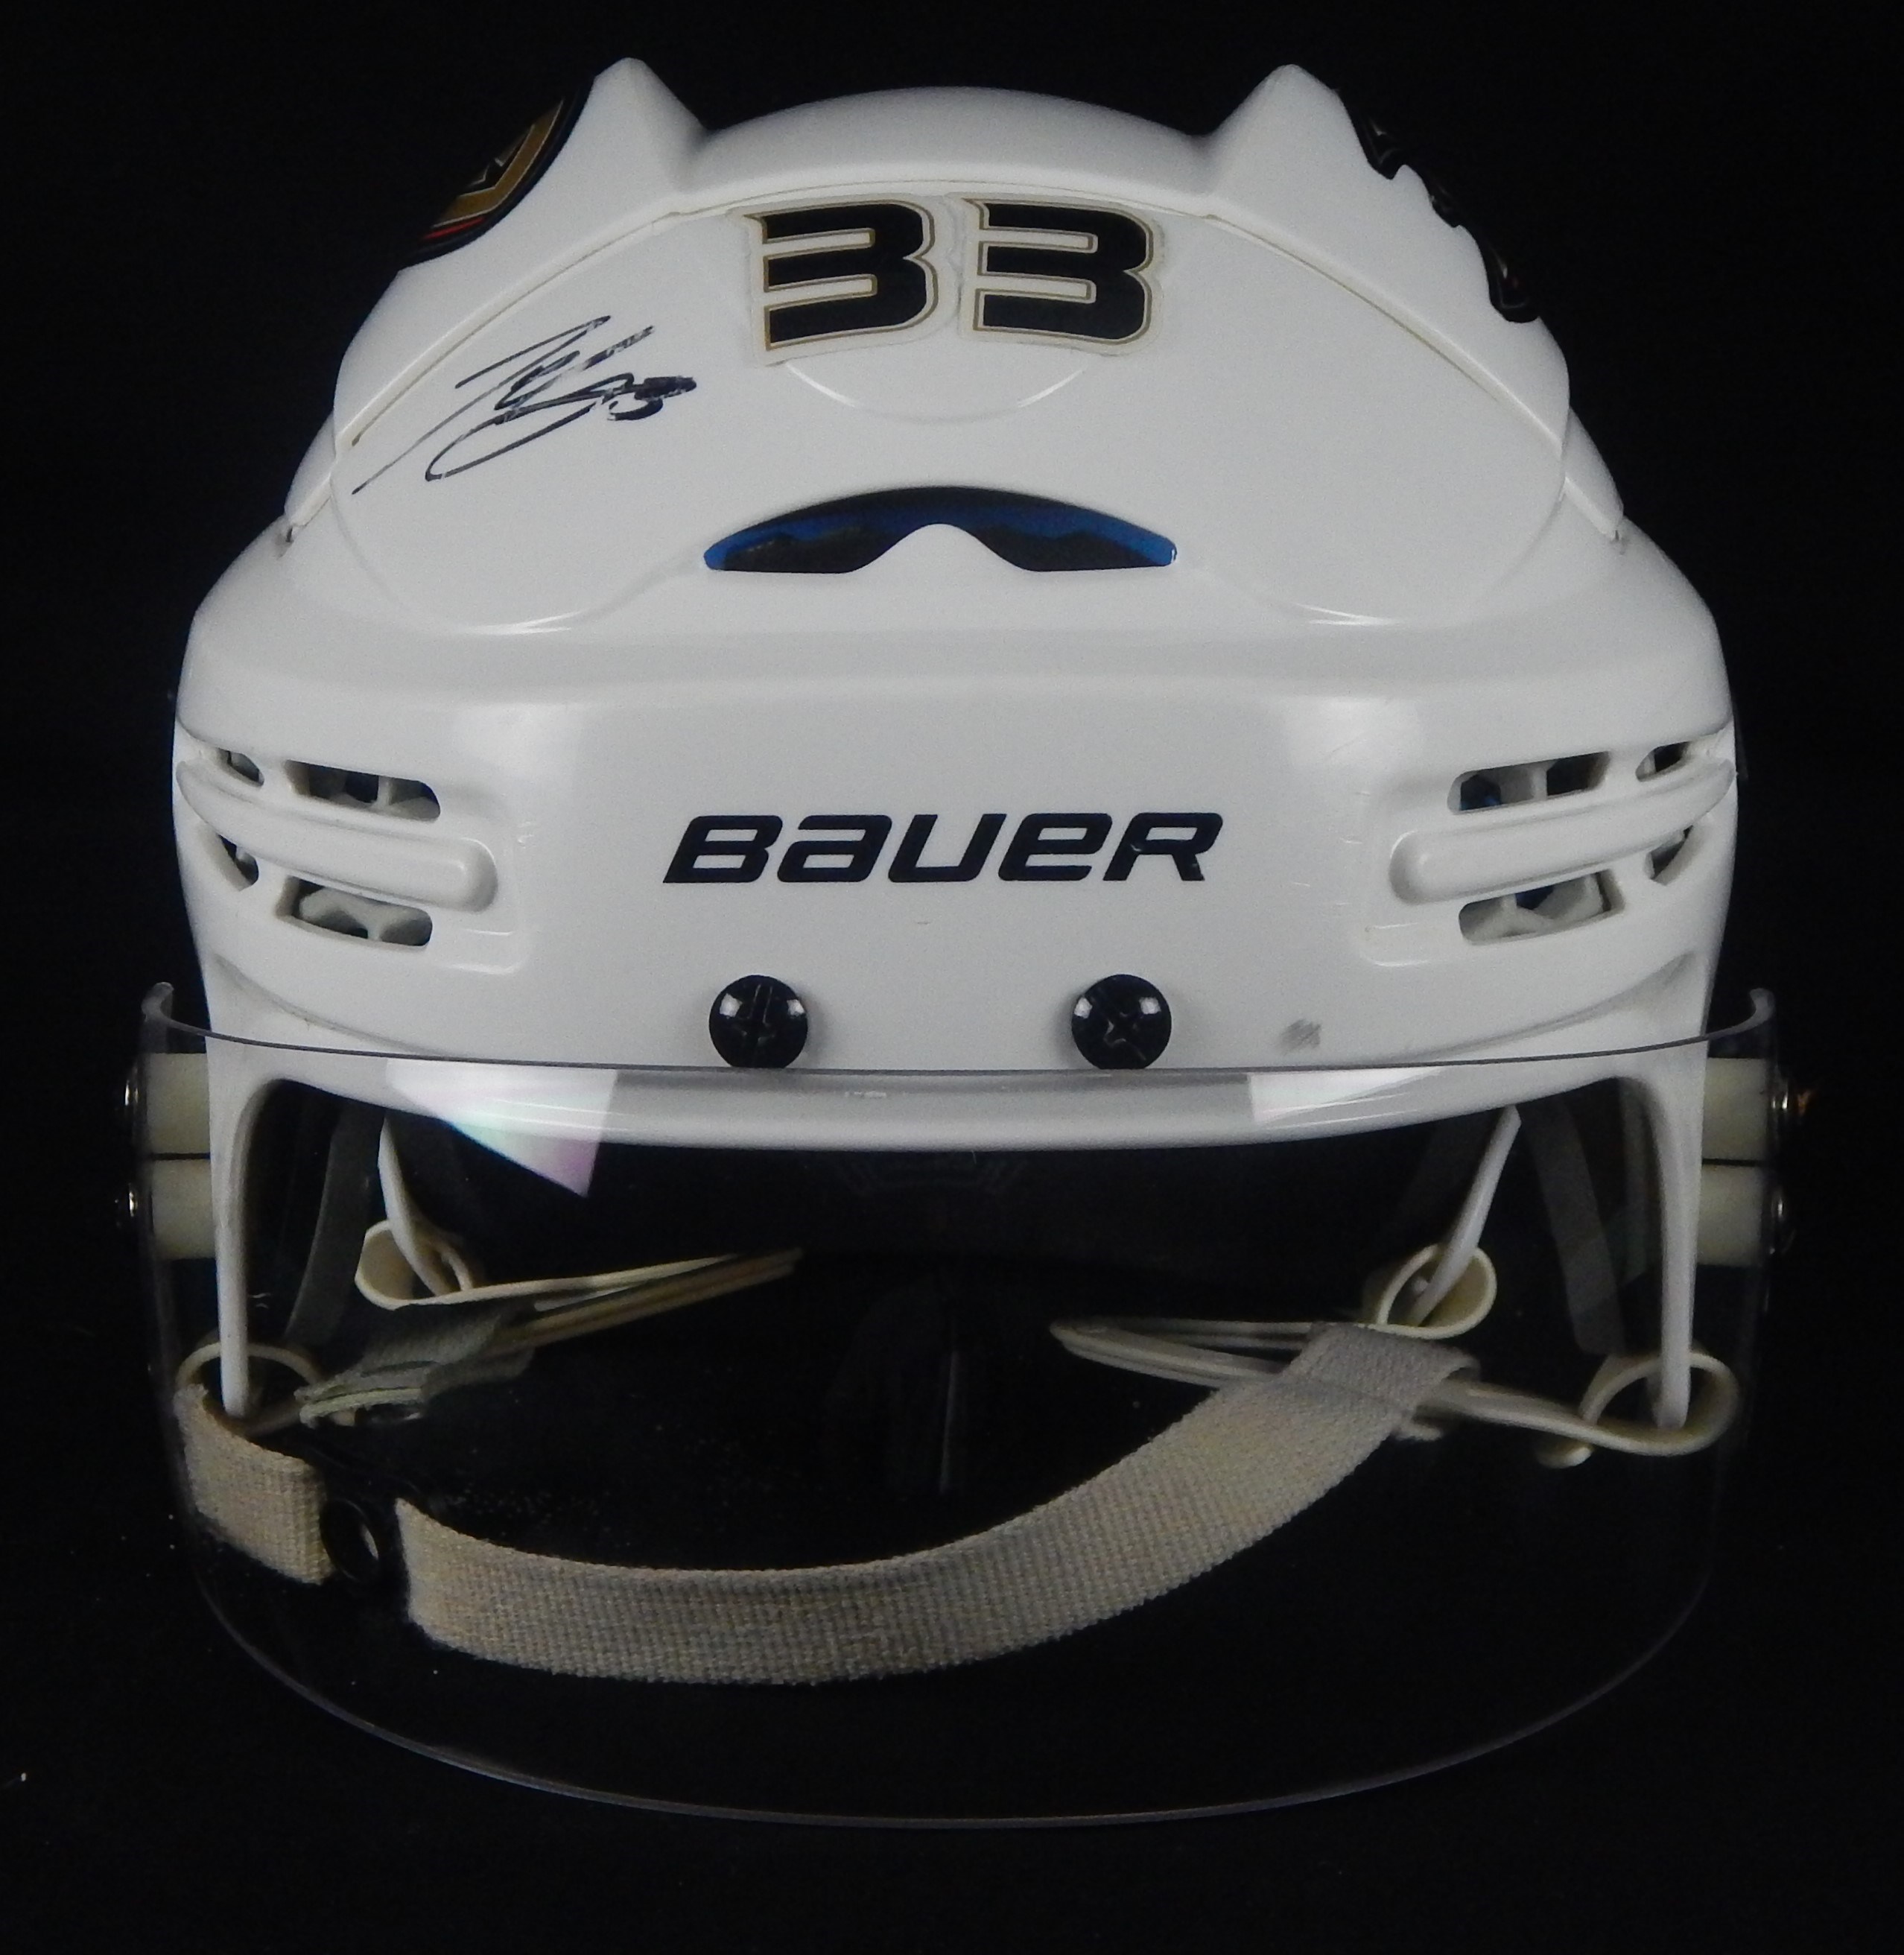 Circa 2014-15 Anaheim Ducks Jakob Silfverberg Game Use/Signed Helmet